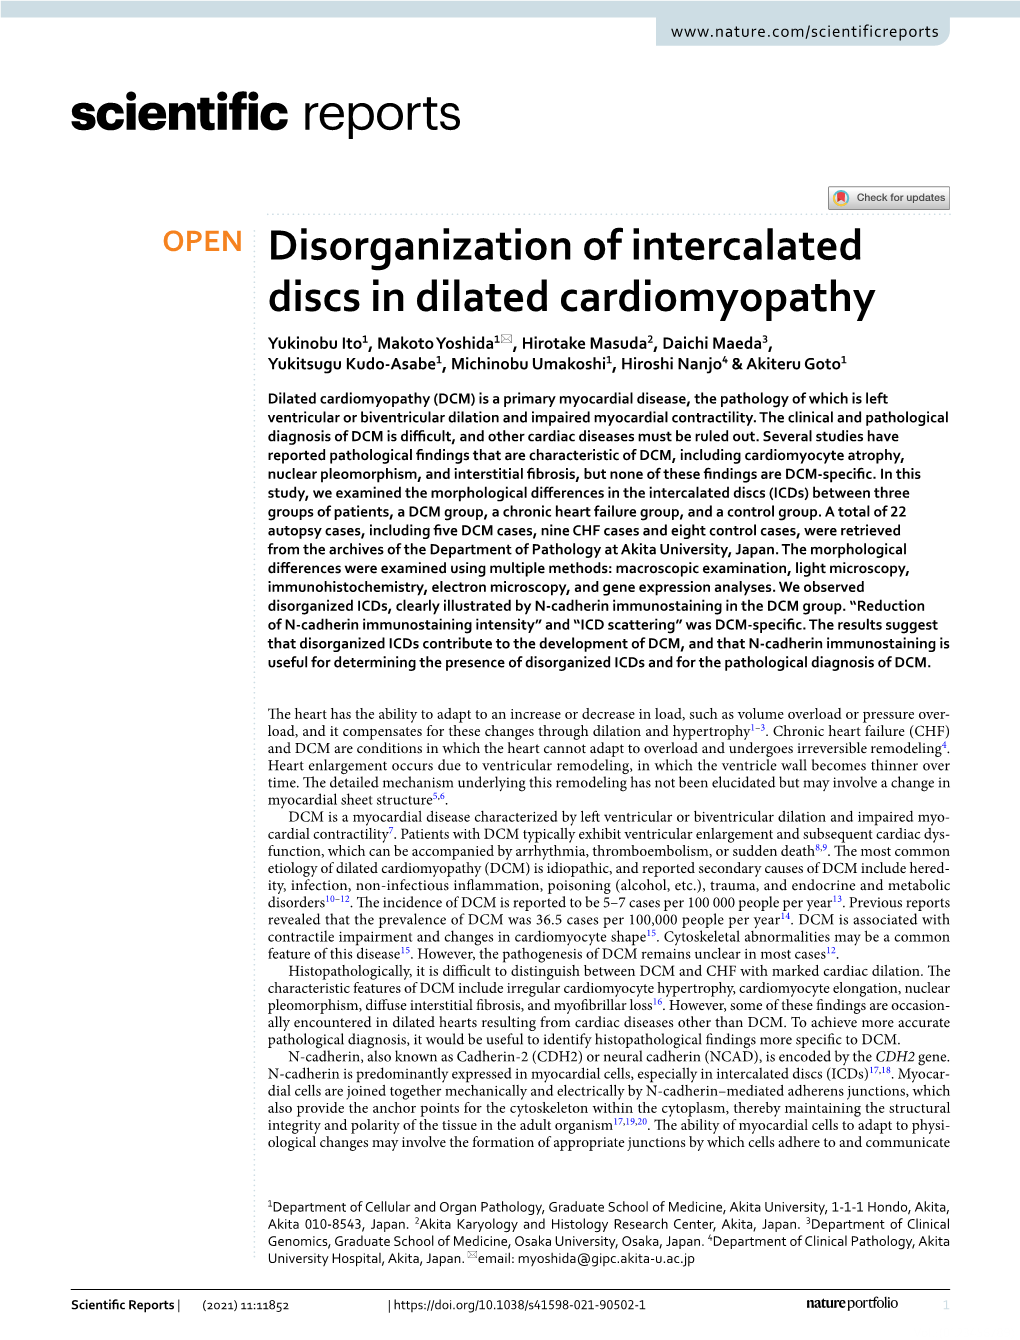 Disorganization of Intercalated Discs in Dilated Cardiomyopathy